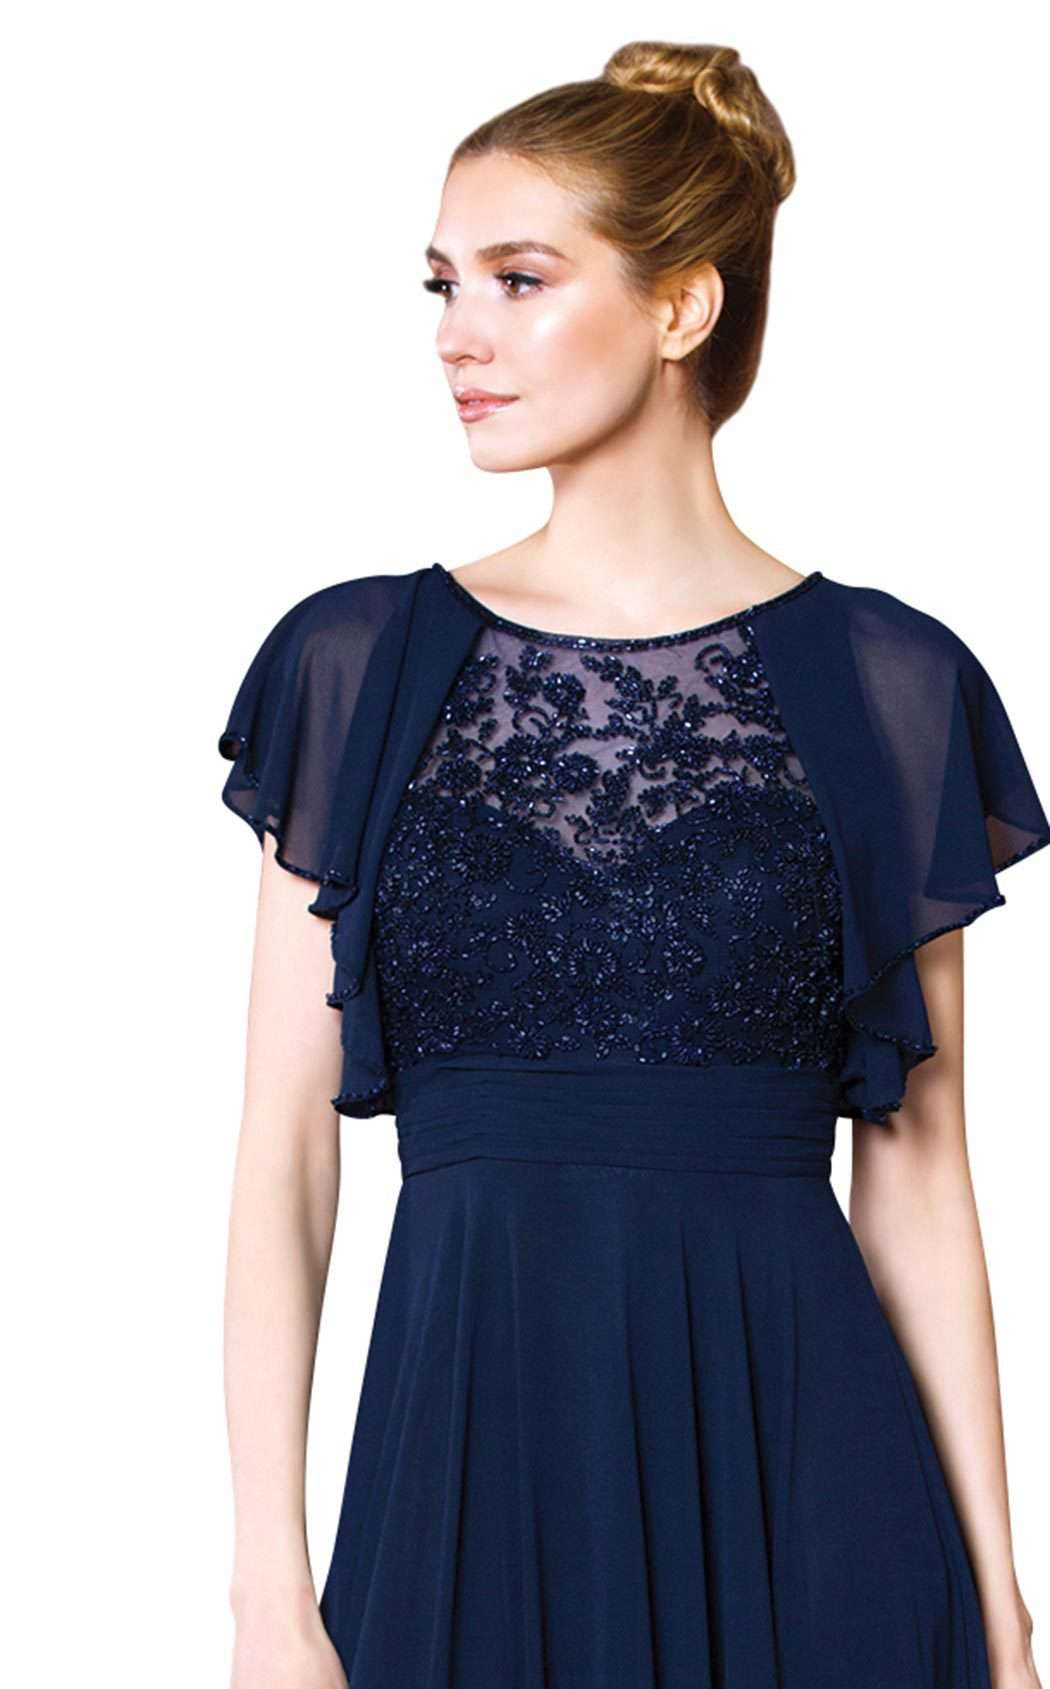 Marsoni M205 Dress | Buy Designer Gowns & Evening Dresses – NewYorkDress